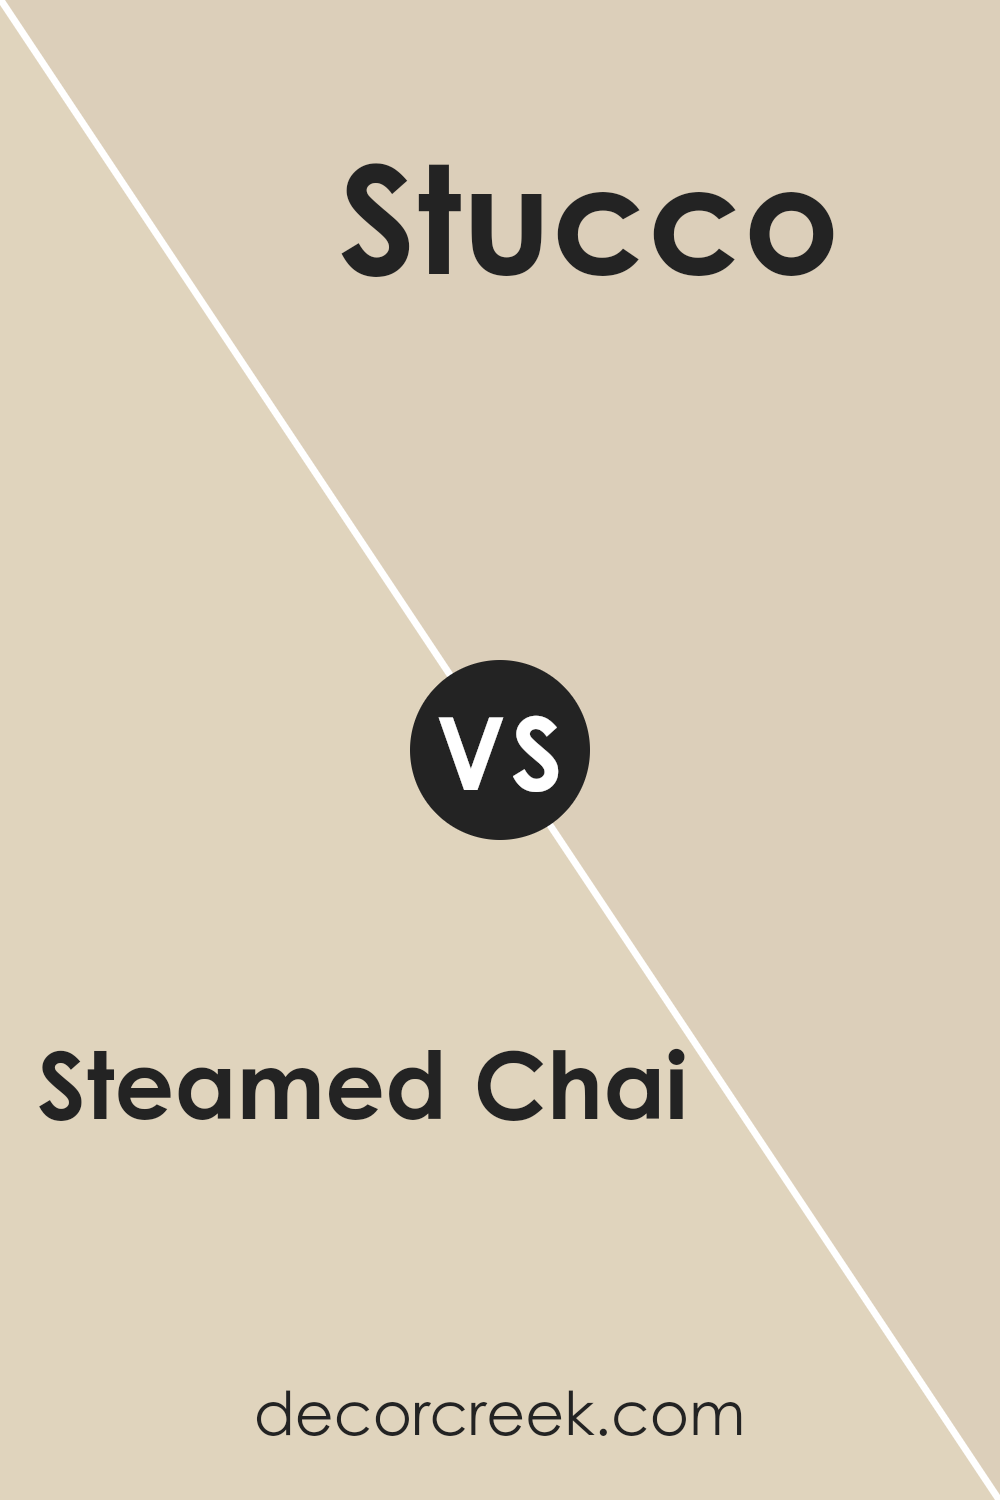 steamed_chai_sw_9509_vs_stucco_sw_7569